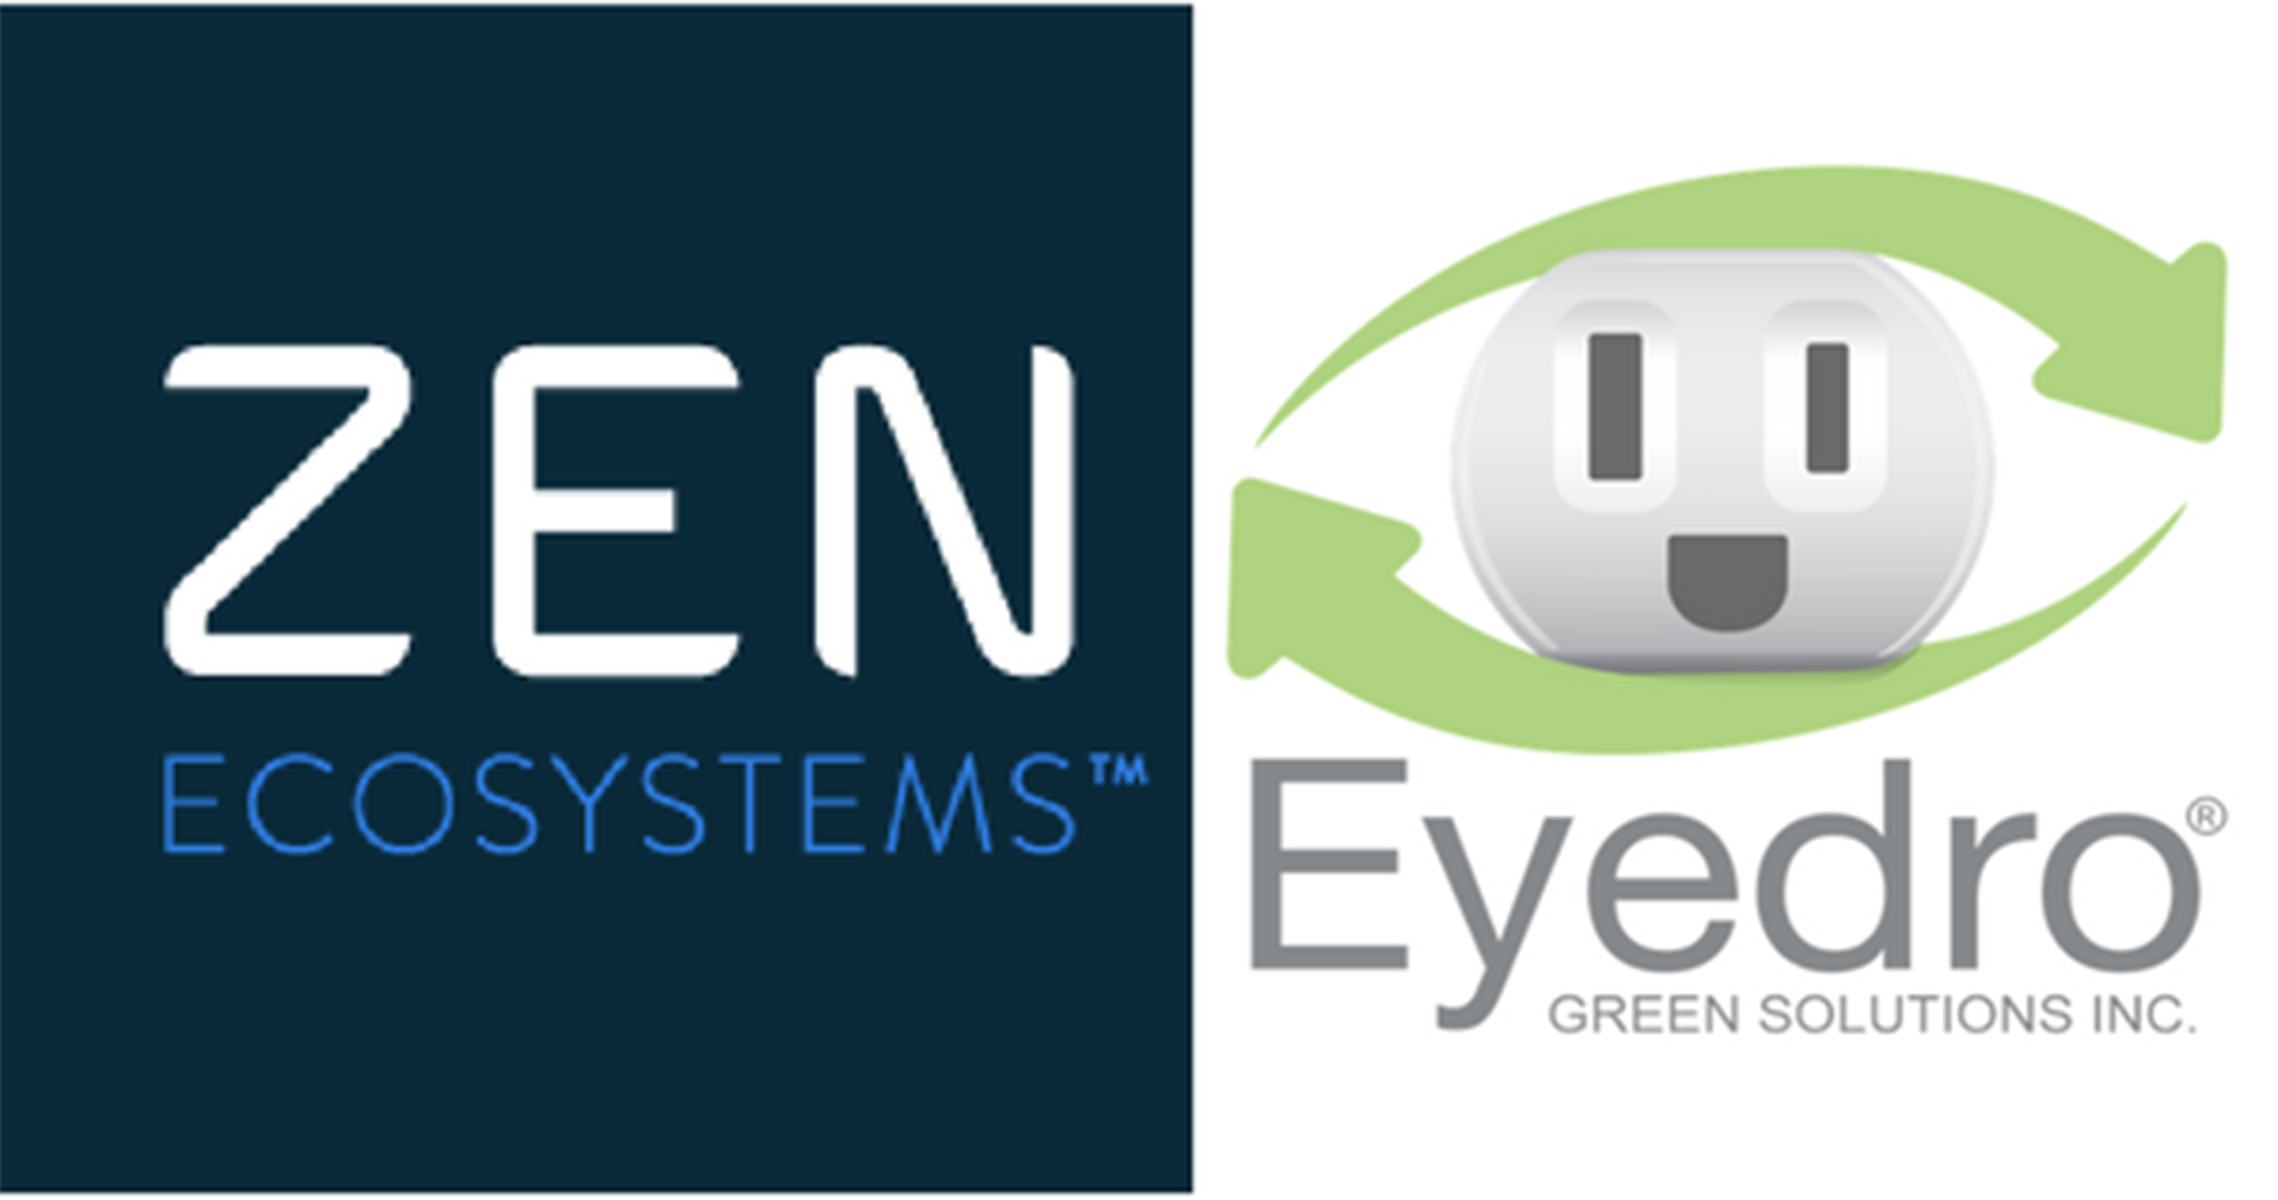 Zen Ecosystems and Eyedro Partner on Technology Integration to Optimize Business Energy Use